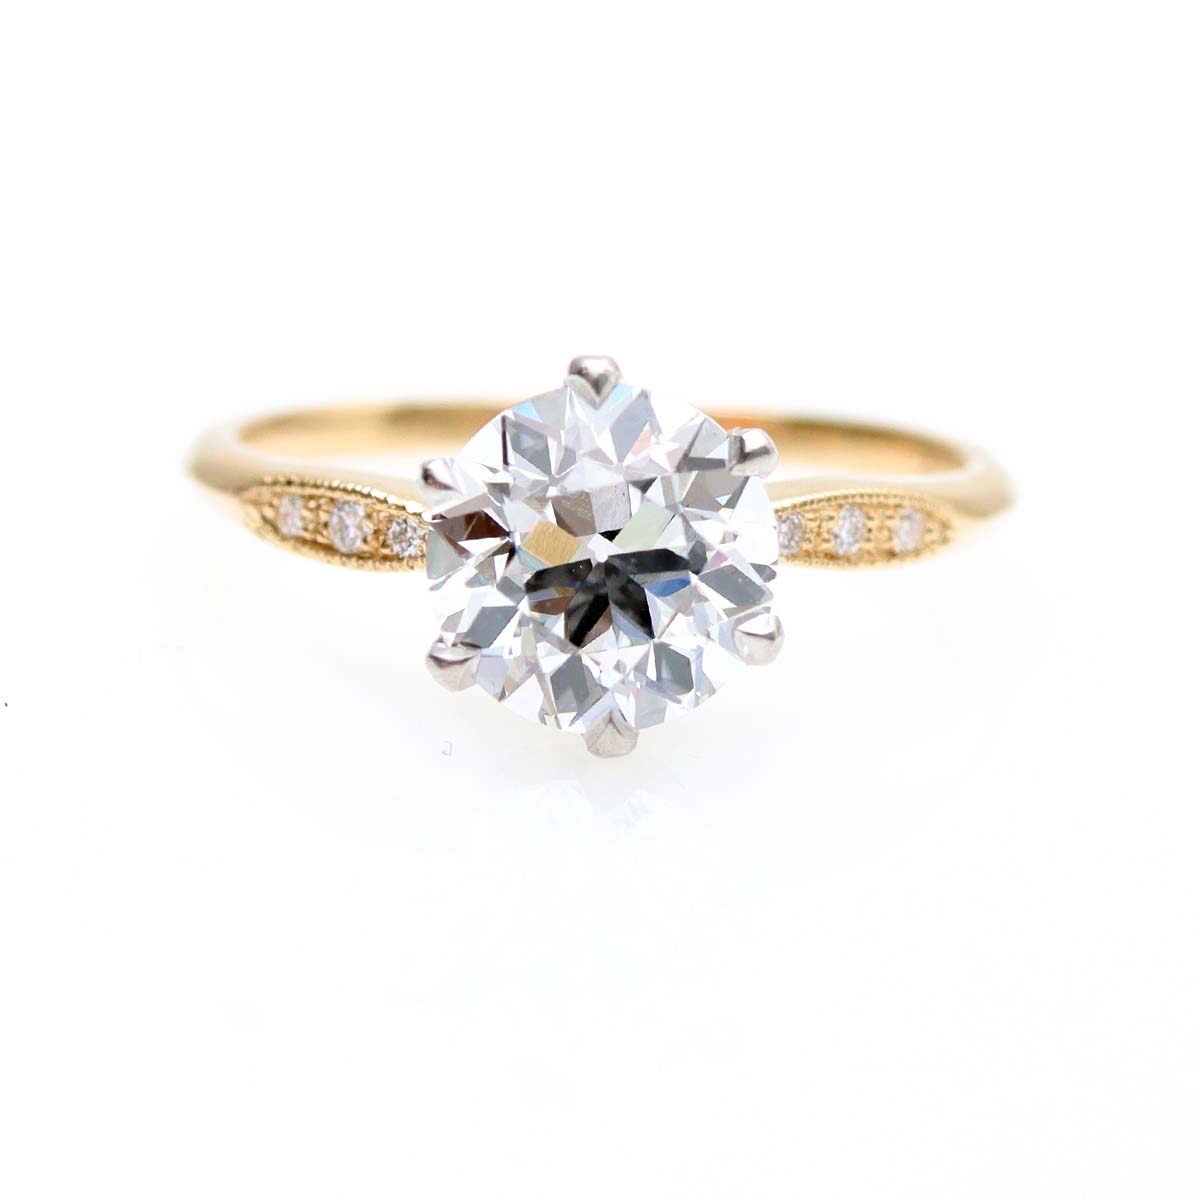 Edwardian Revival Engagement Ring #3604-4